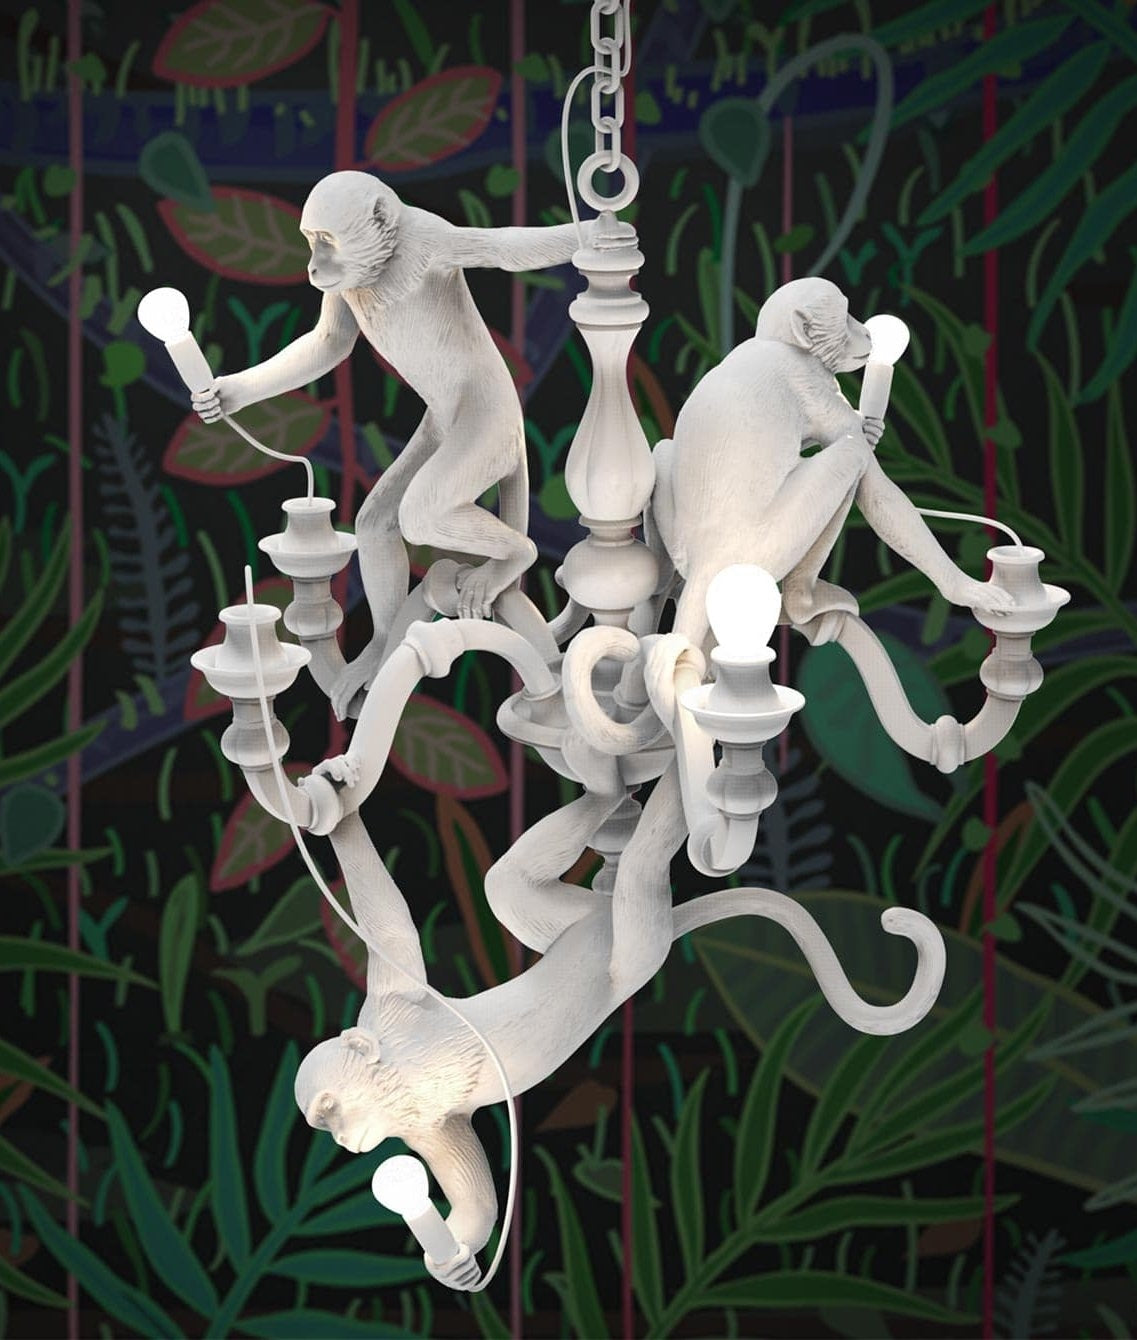 MONKEY chandelier white